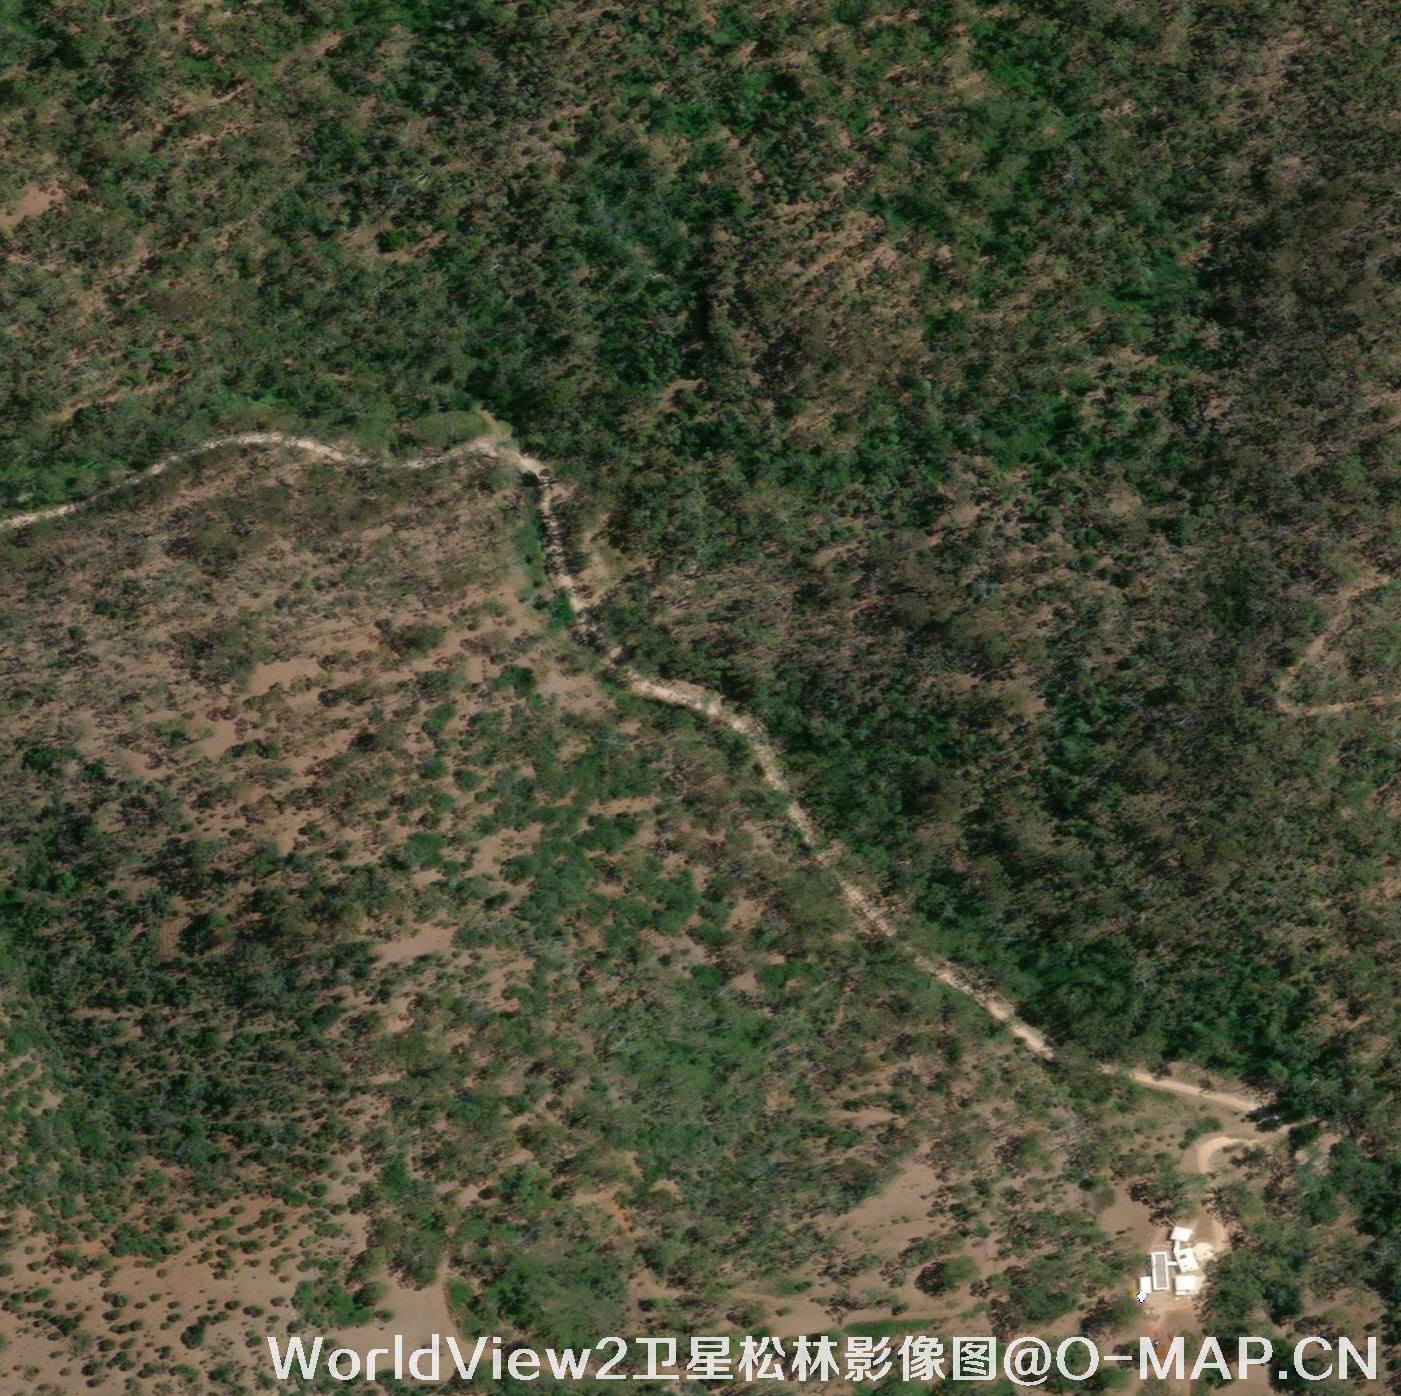 WorldView2卫星拍摄的0.5米分辨率影像图